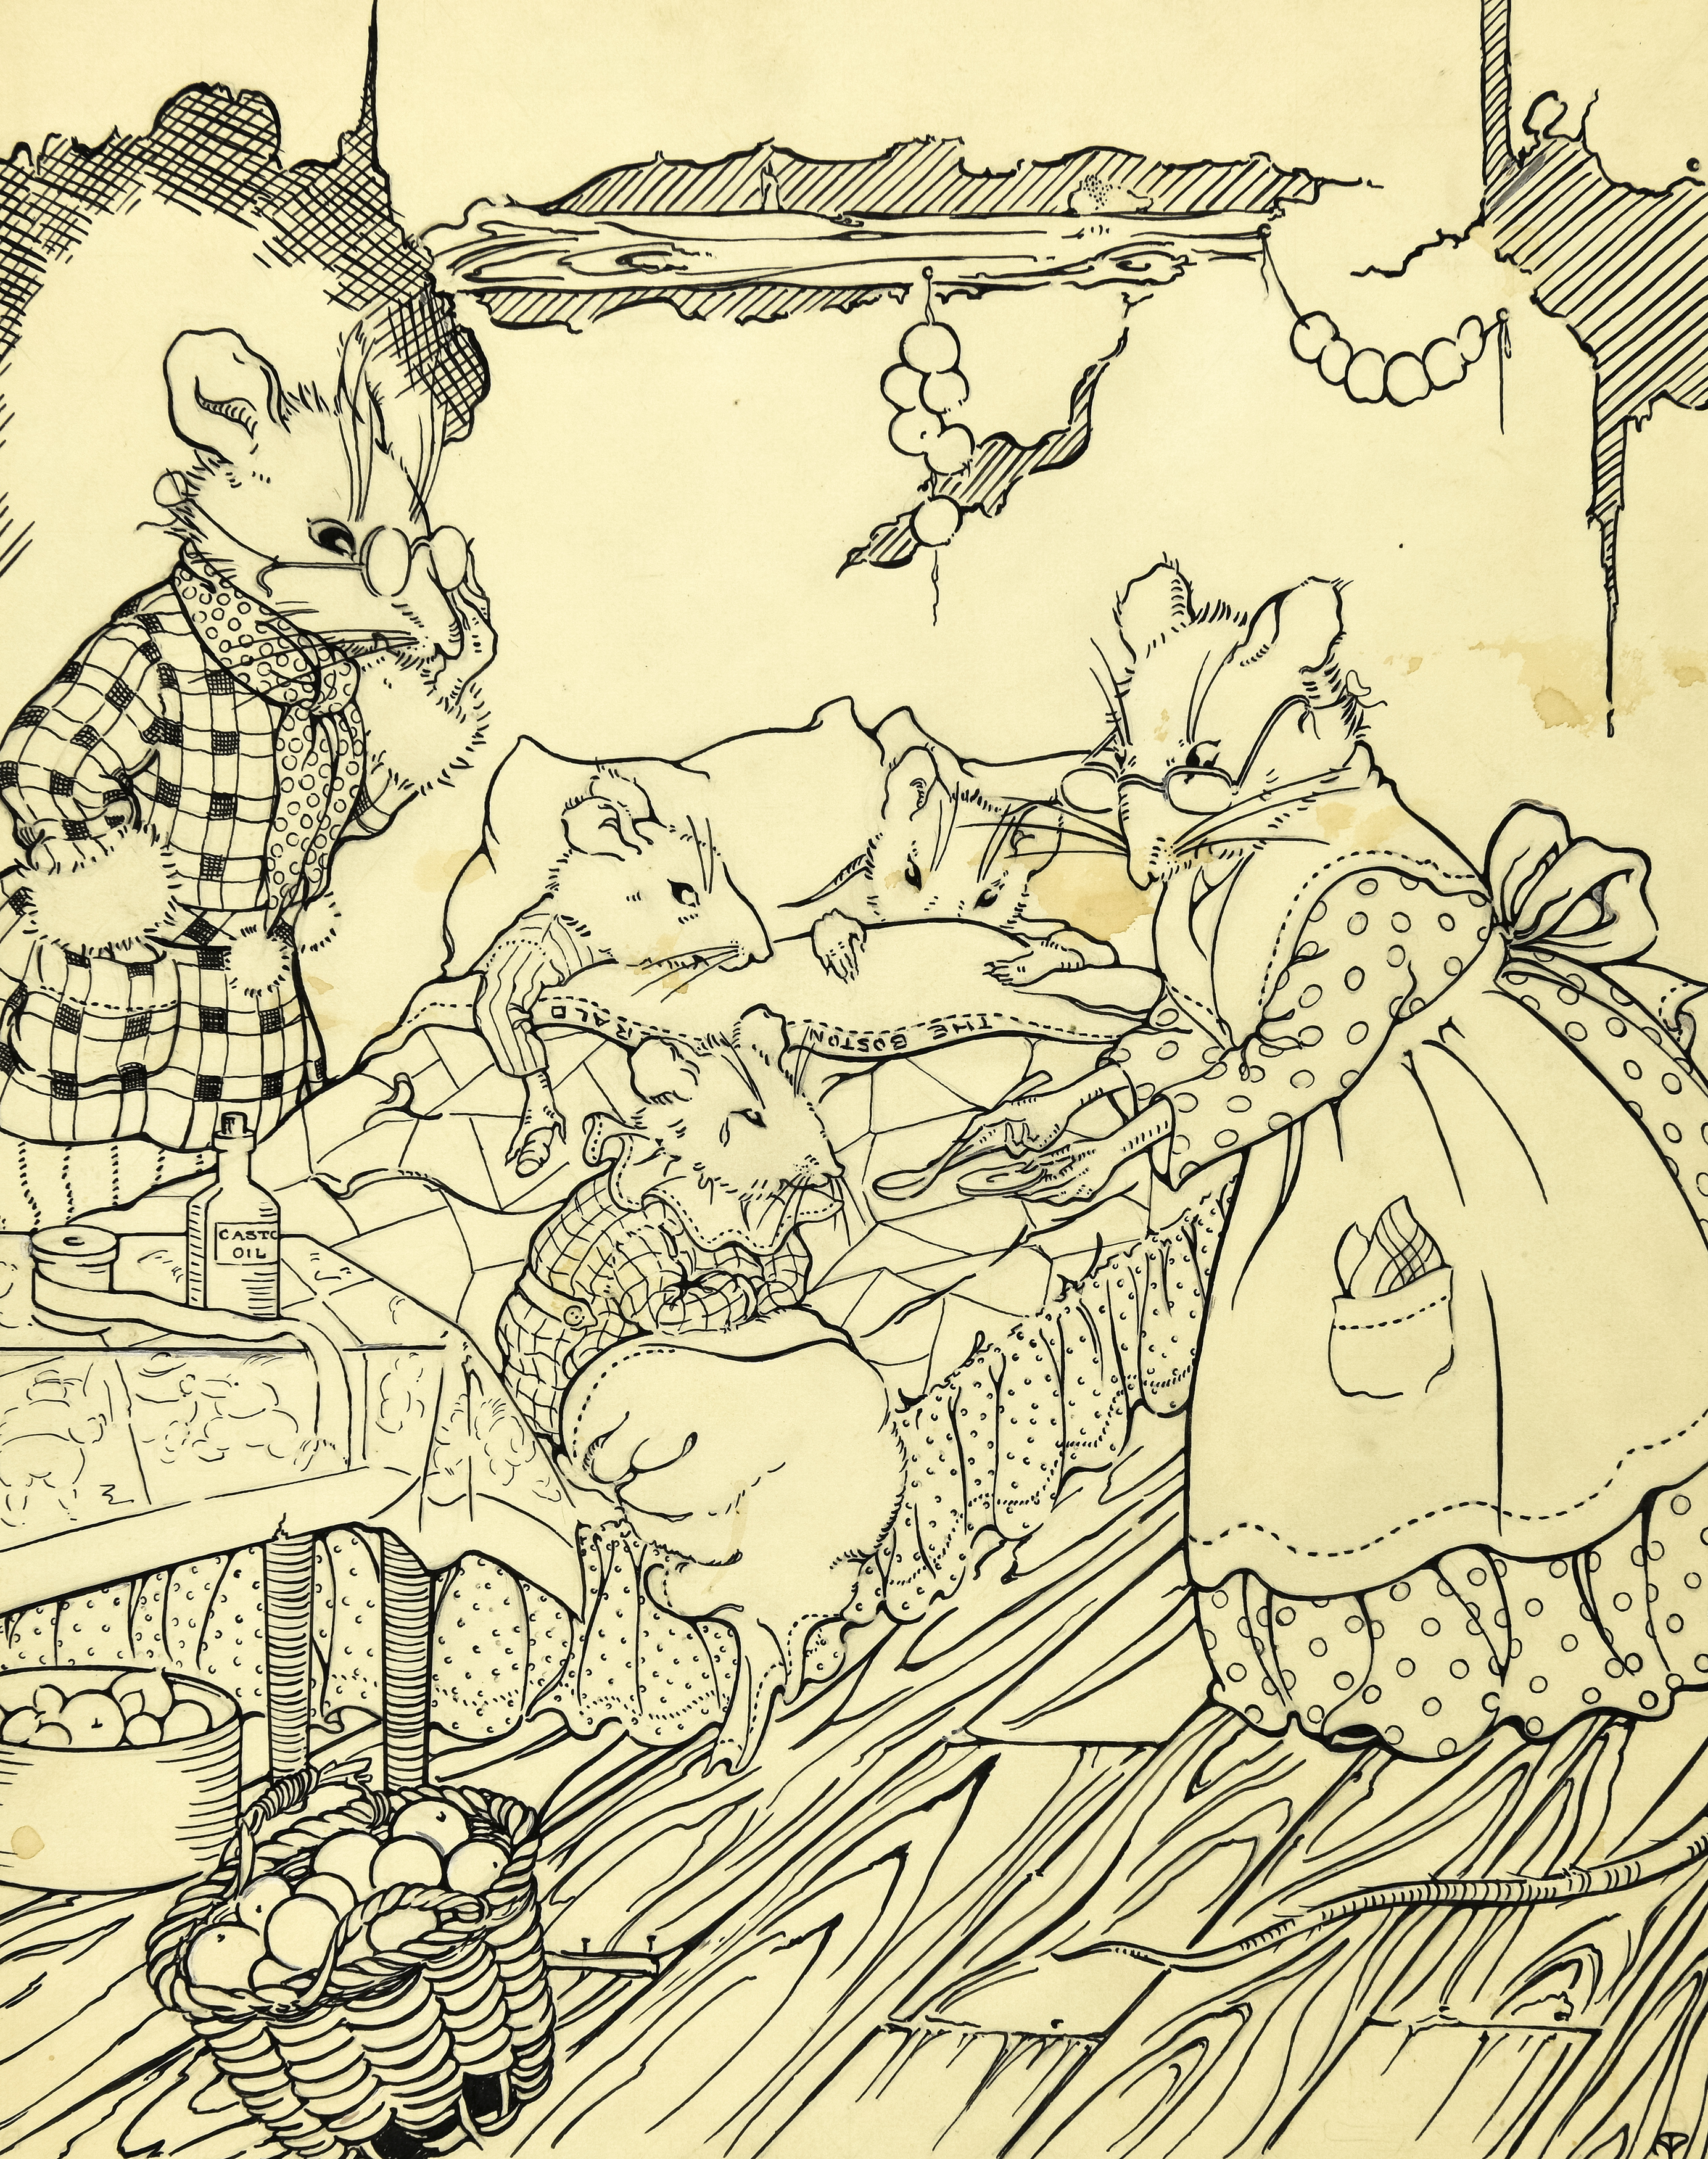 Illustration of mice on ship.